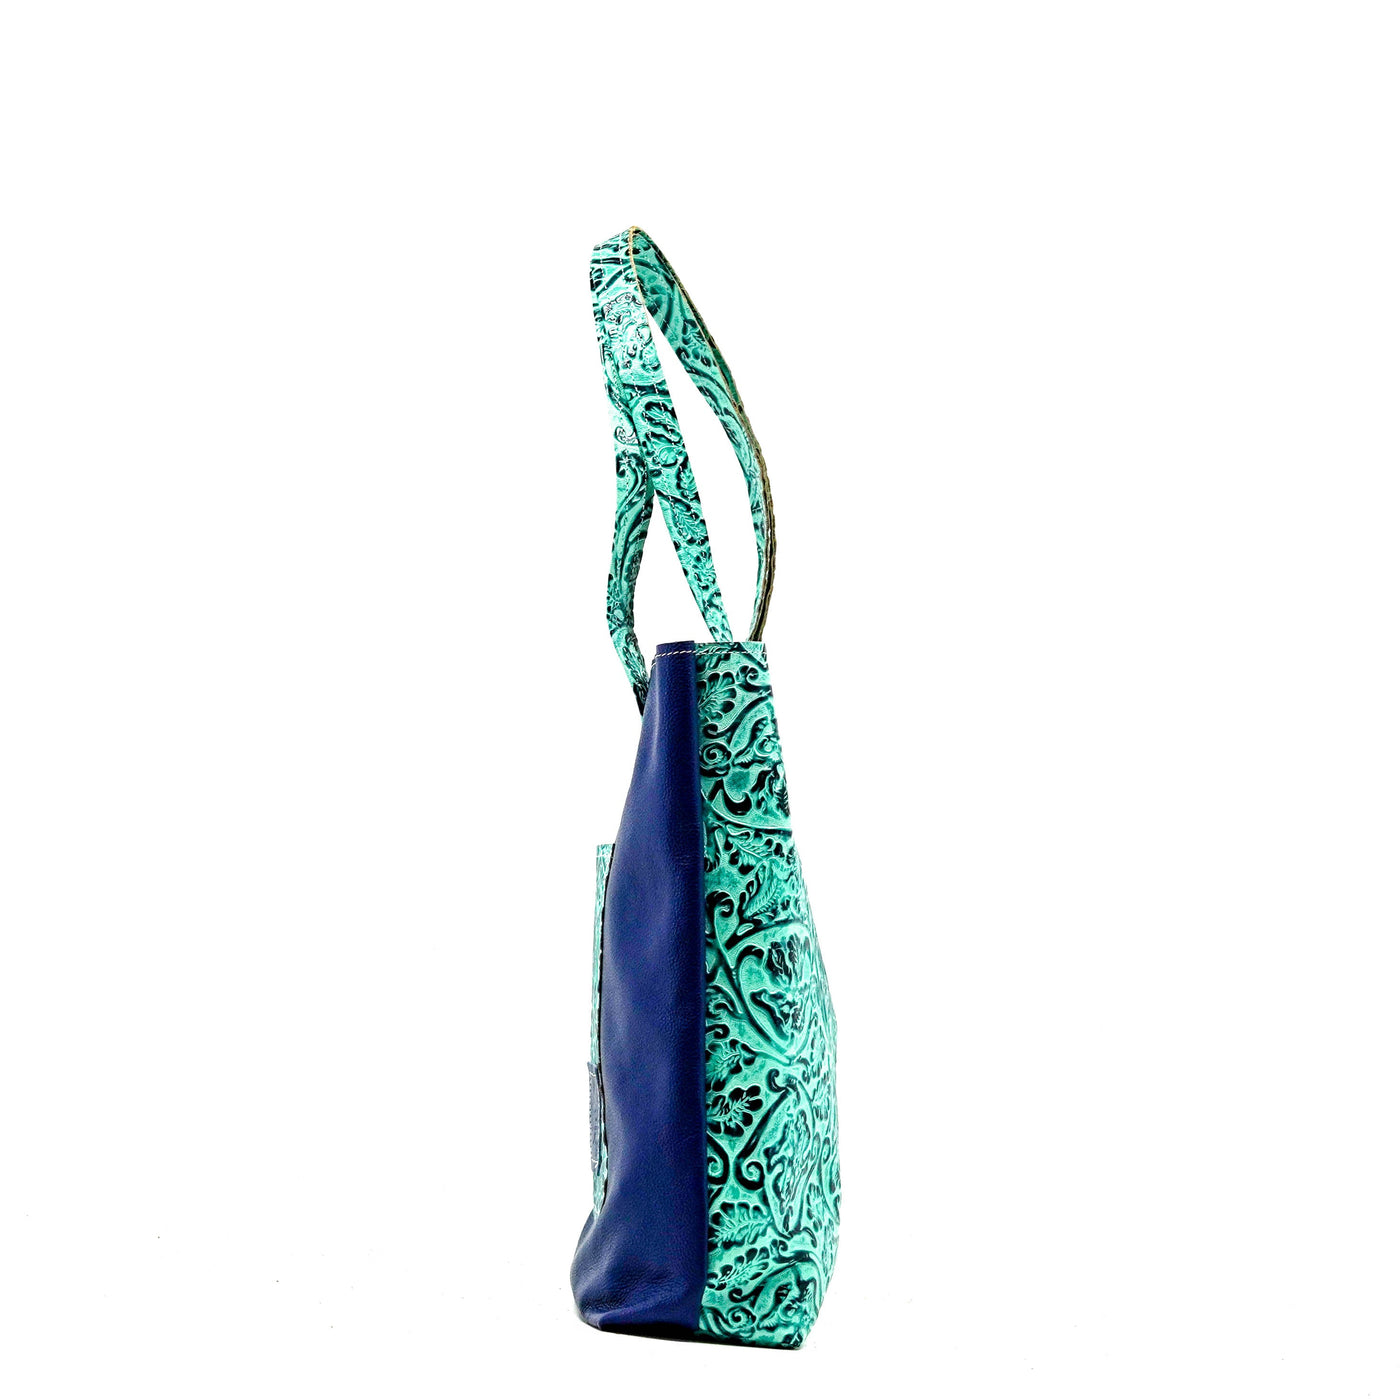 Trisha - All Embossed w/ Sea Glass Tool-Trisha-Western-Cowhide-Bags-Handmade-Products-Gifts-Dancing Cactus Designs